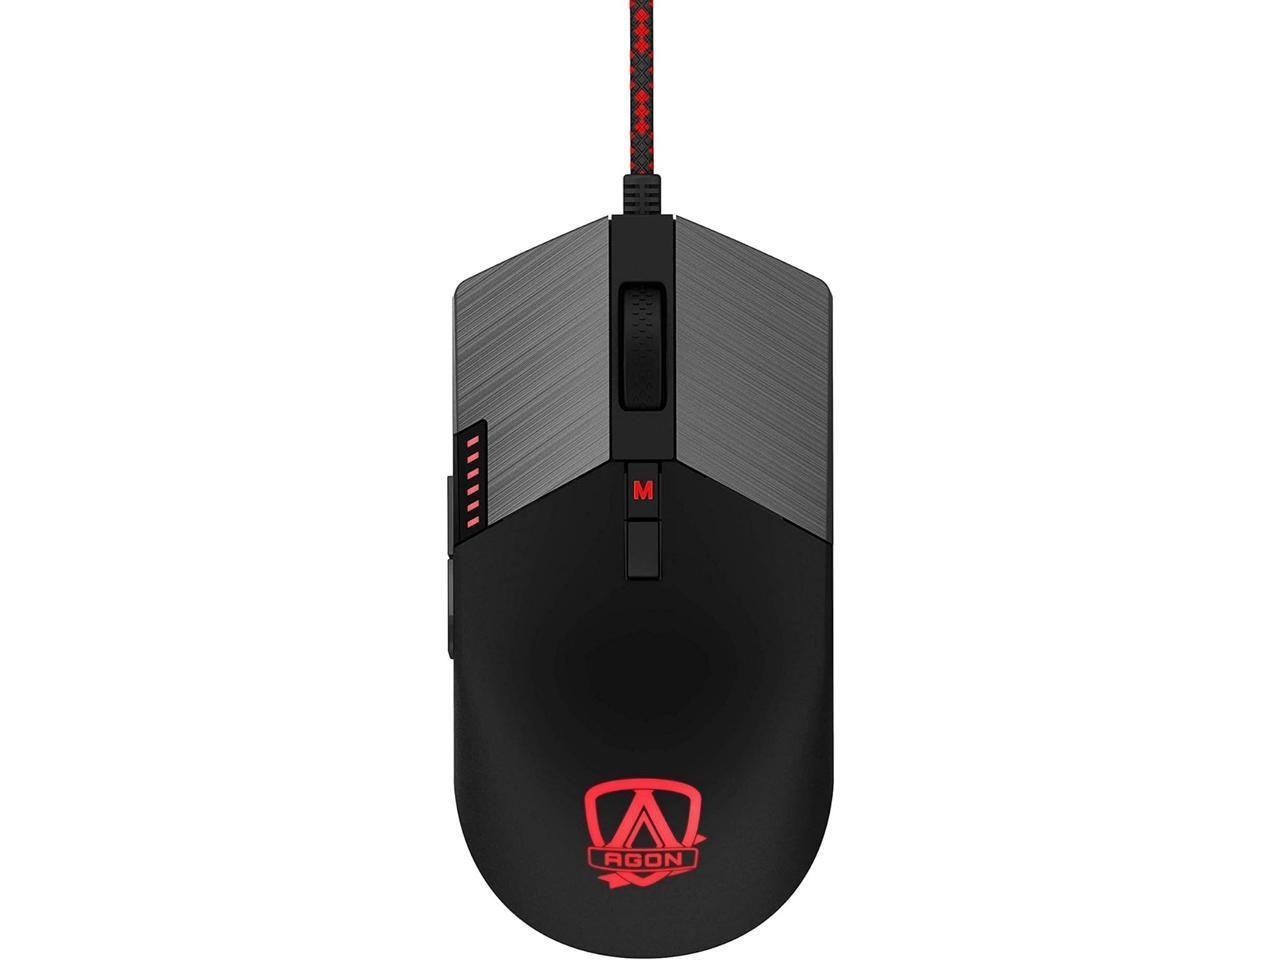 Aoc Agon Agm700 Gaming Mouse - 16